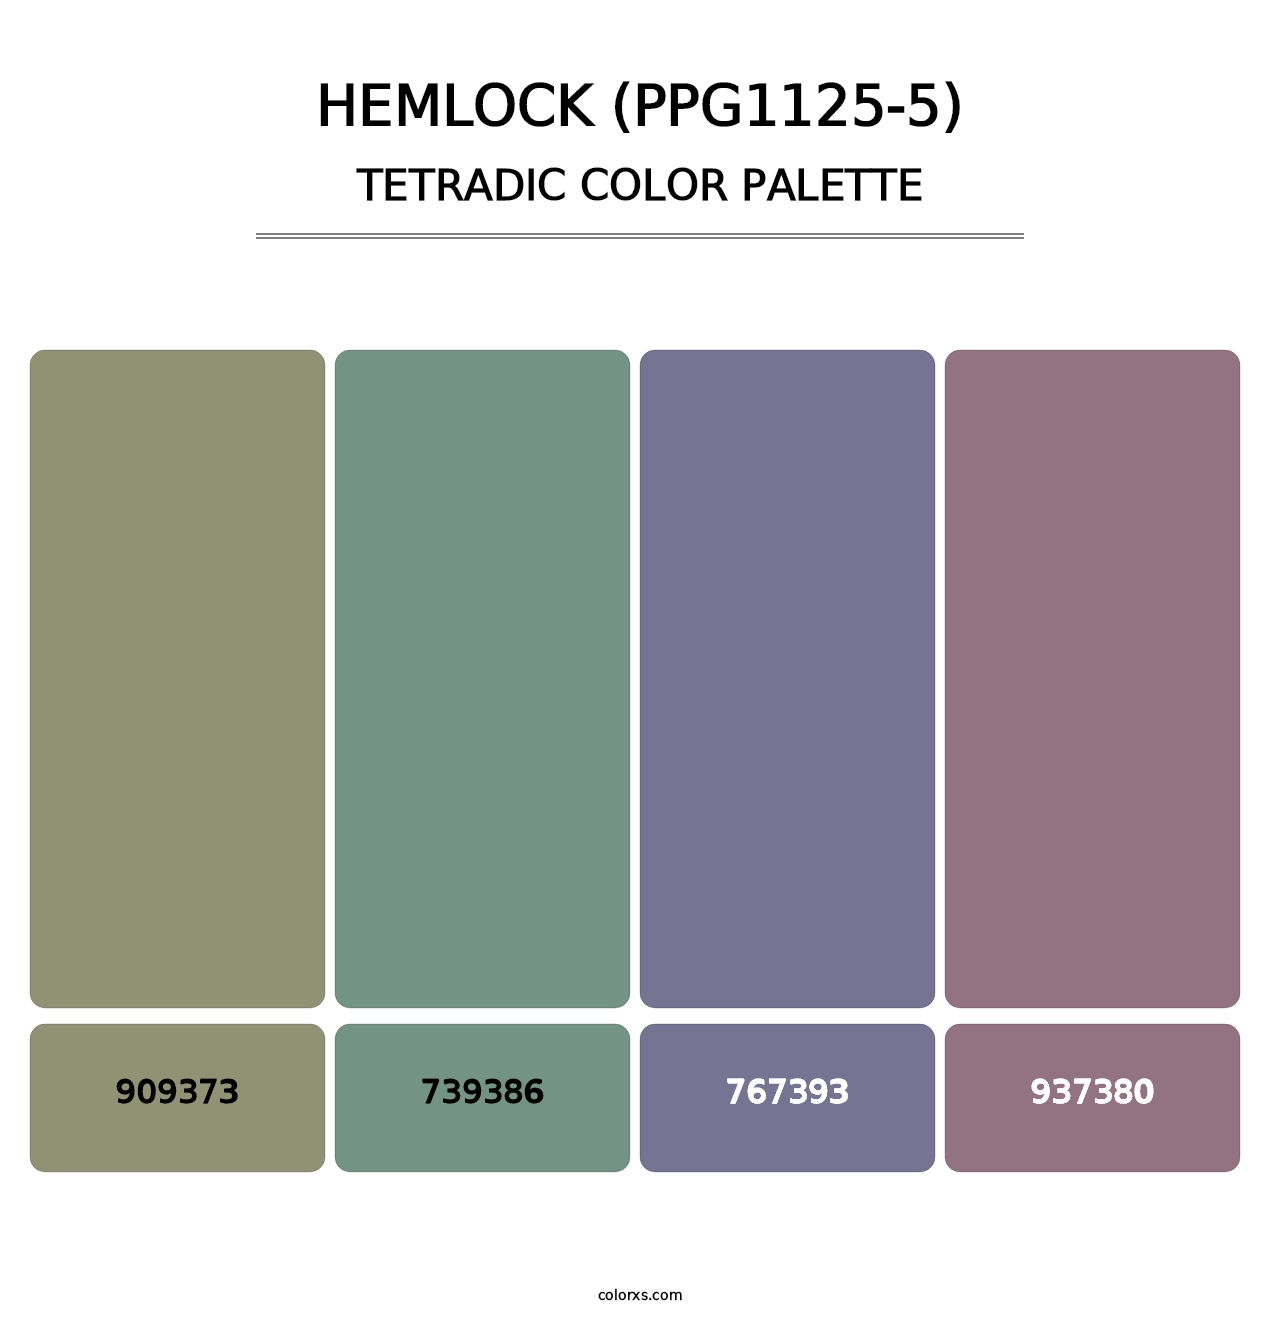 Hemlock (PPG1125-5) - Tetradic Color Palette